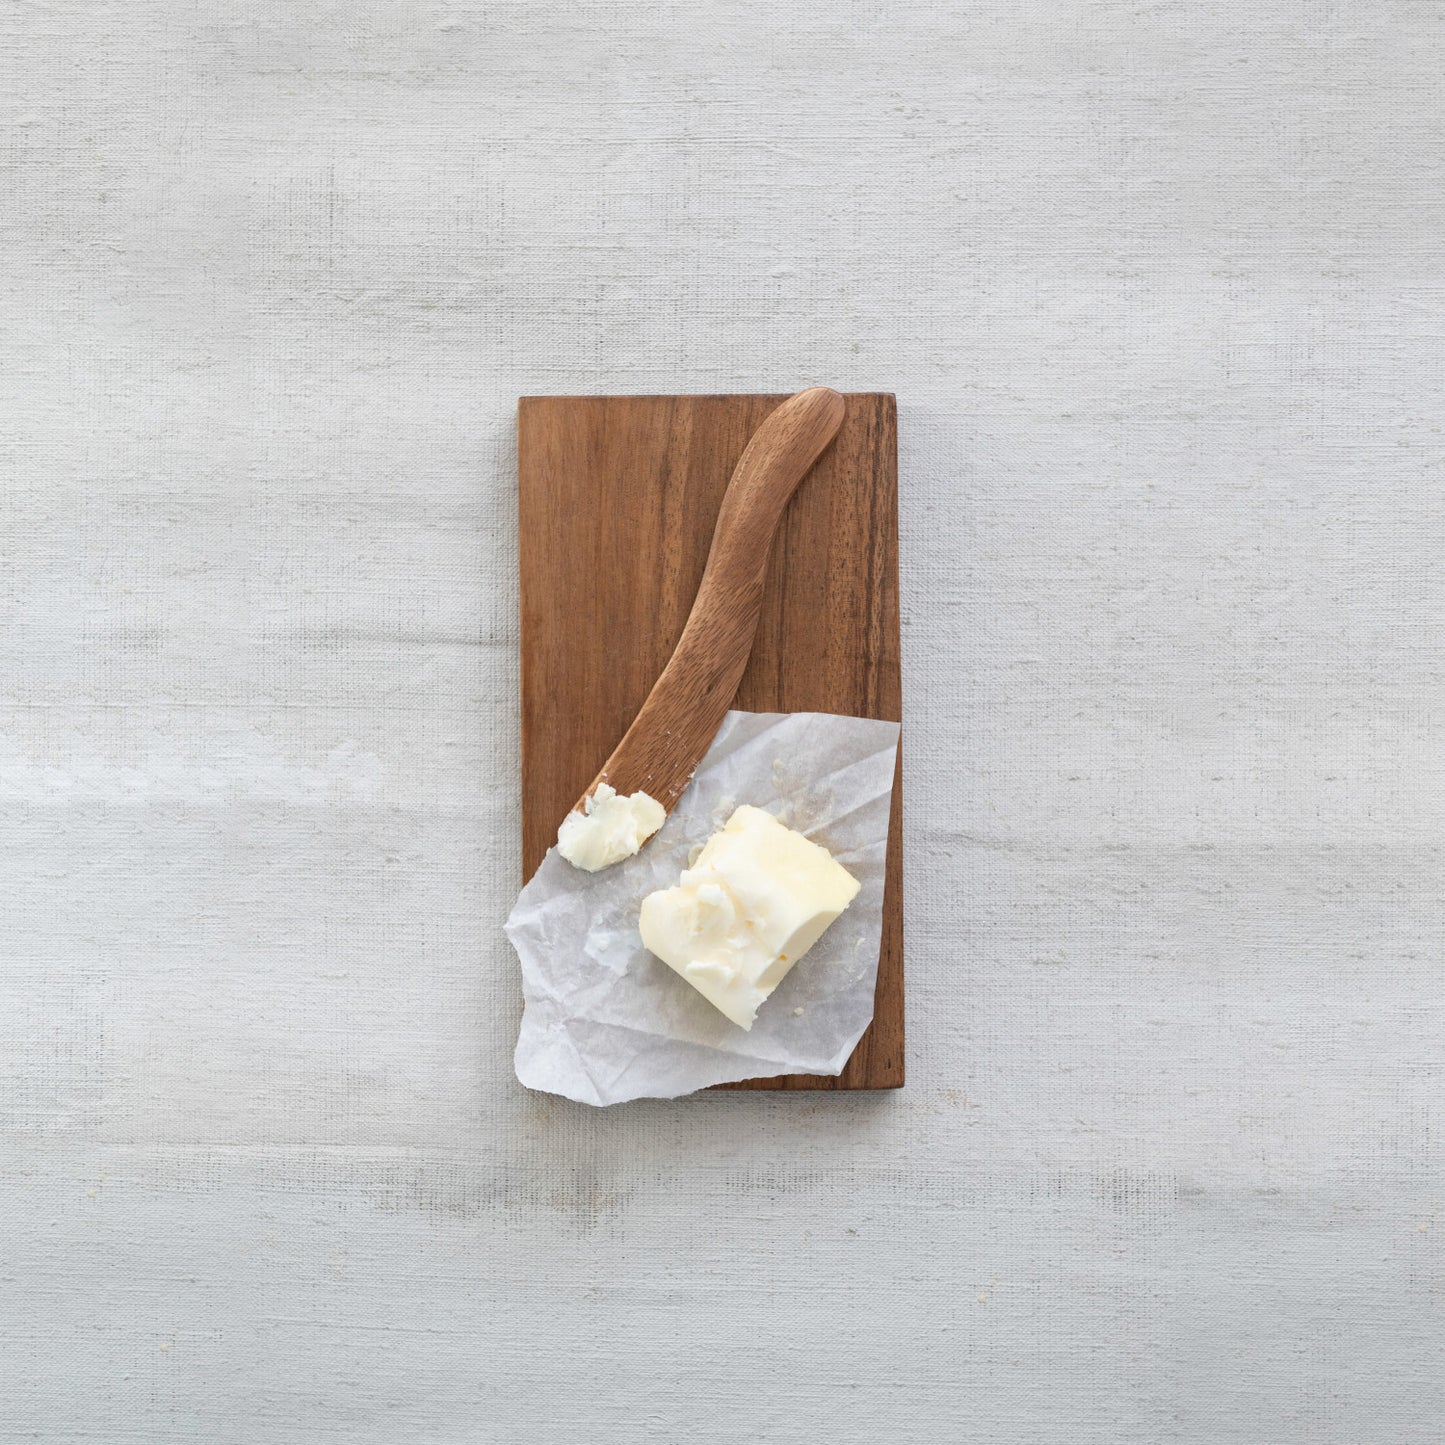 Acacia Wood Cheese/Cutting Board w/ Canape Knife, Set of 2